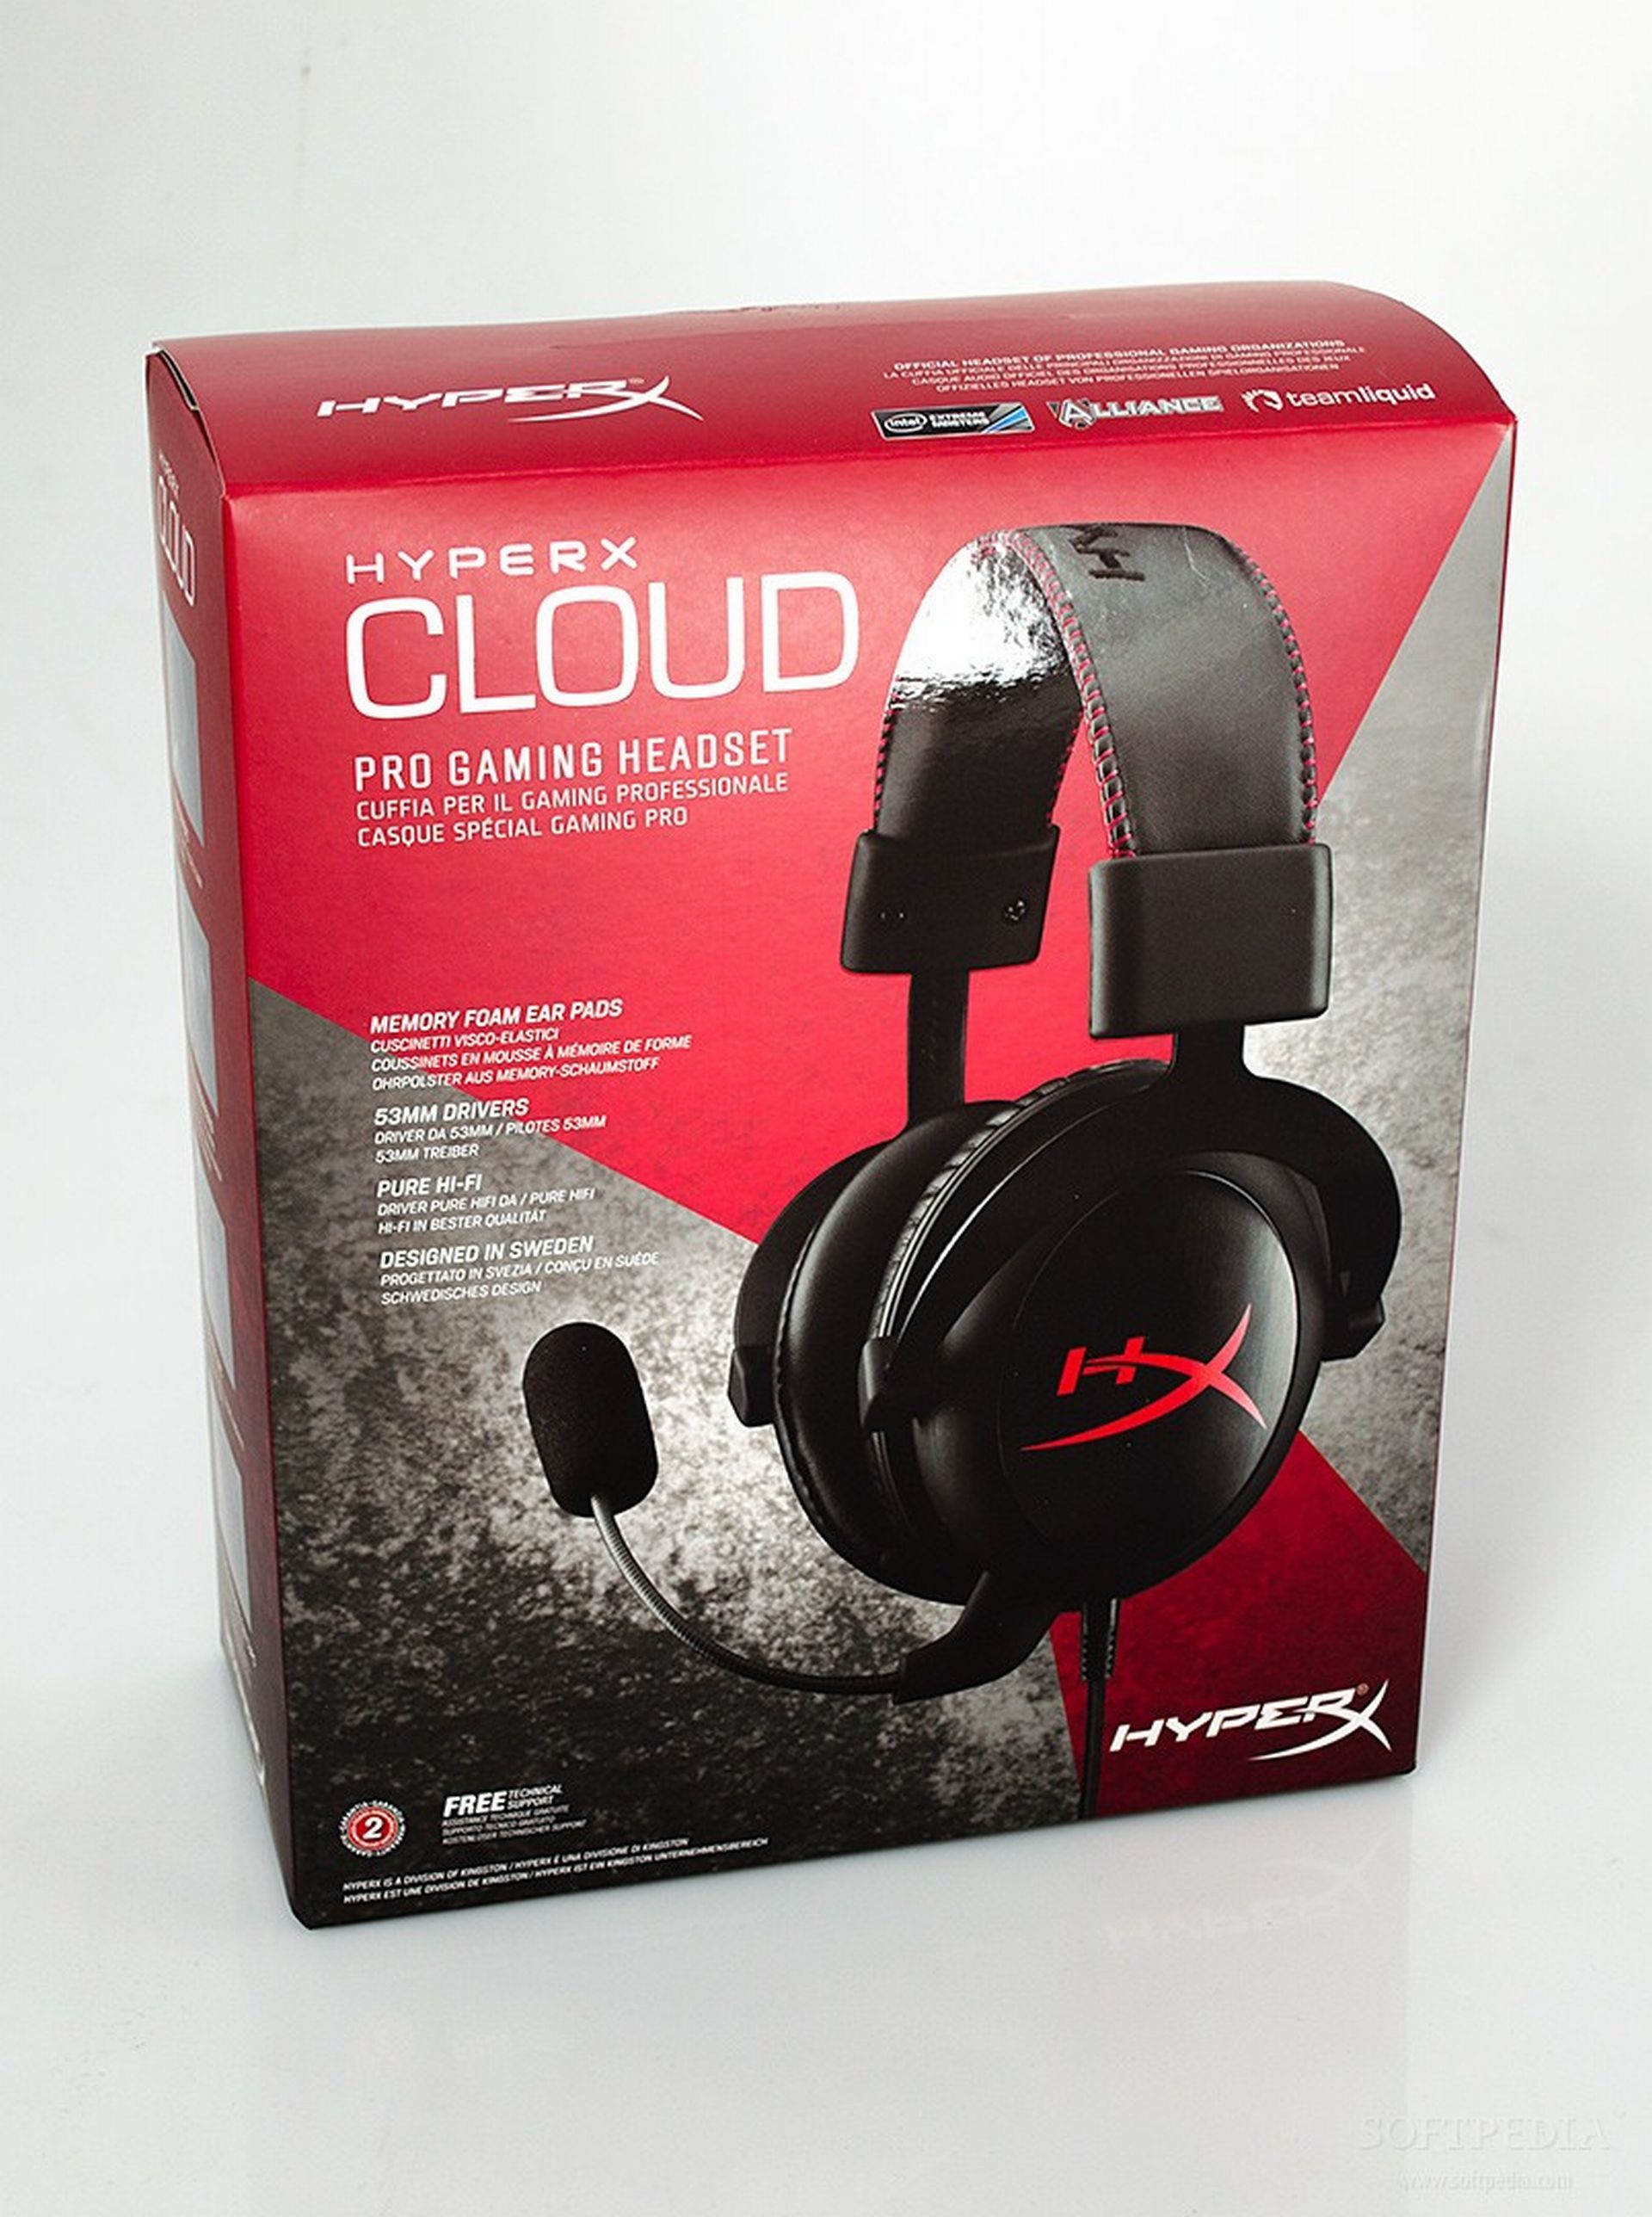 Kingston HyperX Cloud Pro Gaming Headset Review (PC)